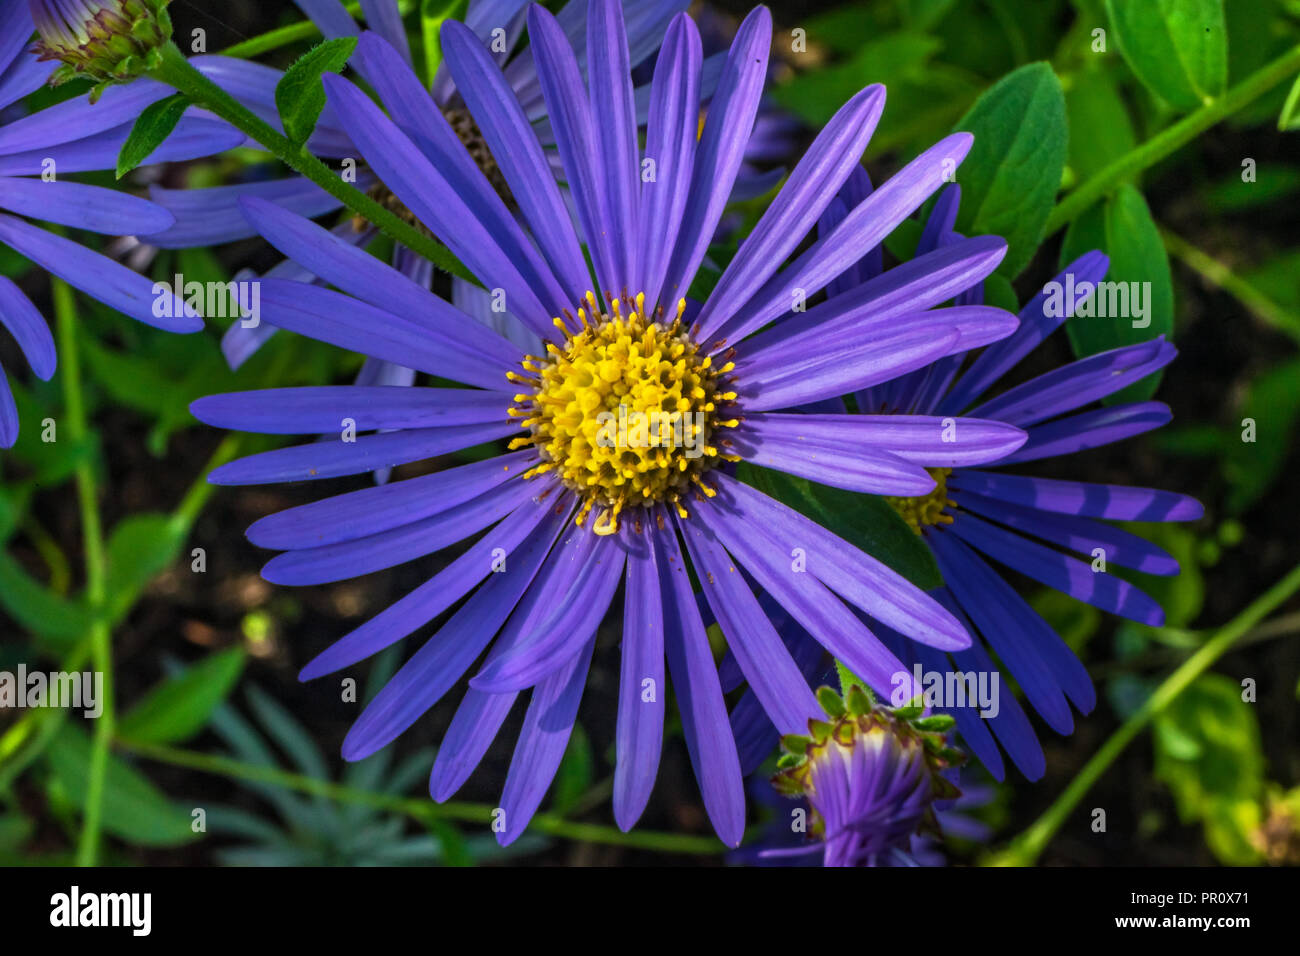 Blue Yellow New York Aster Flower Perennial Symphyotrichum novi-belgii Stock Photo